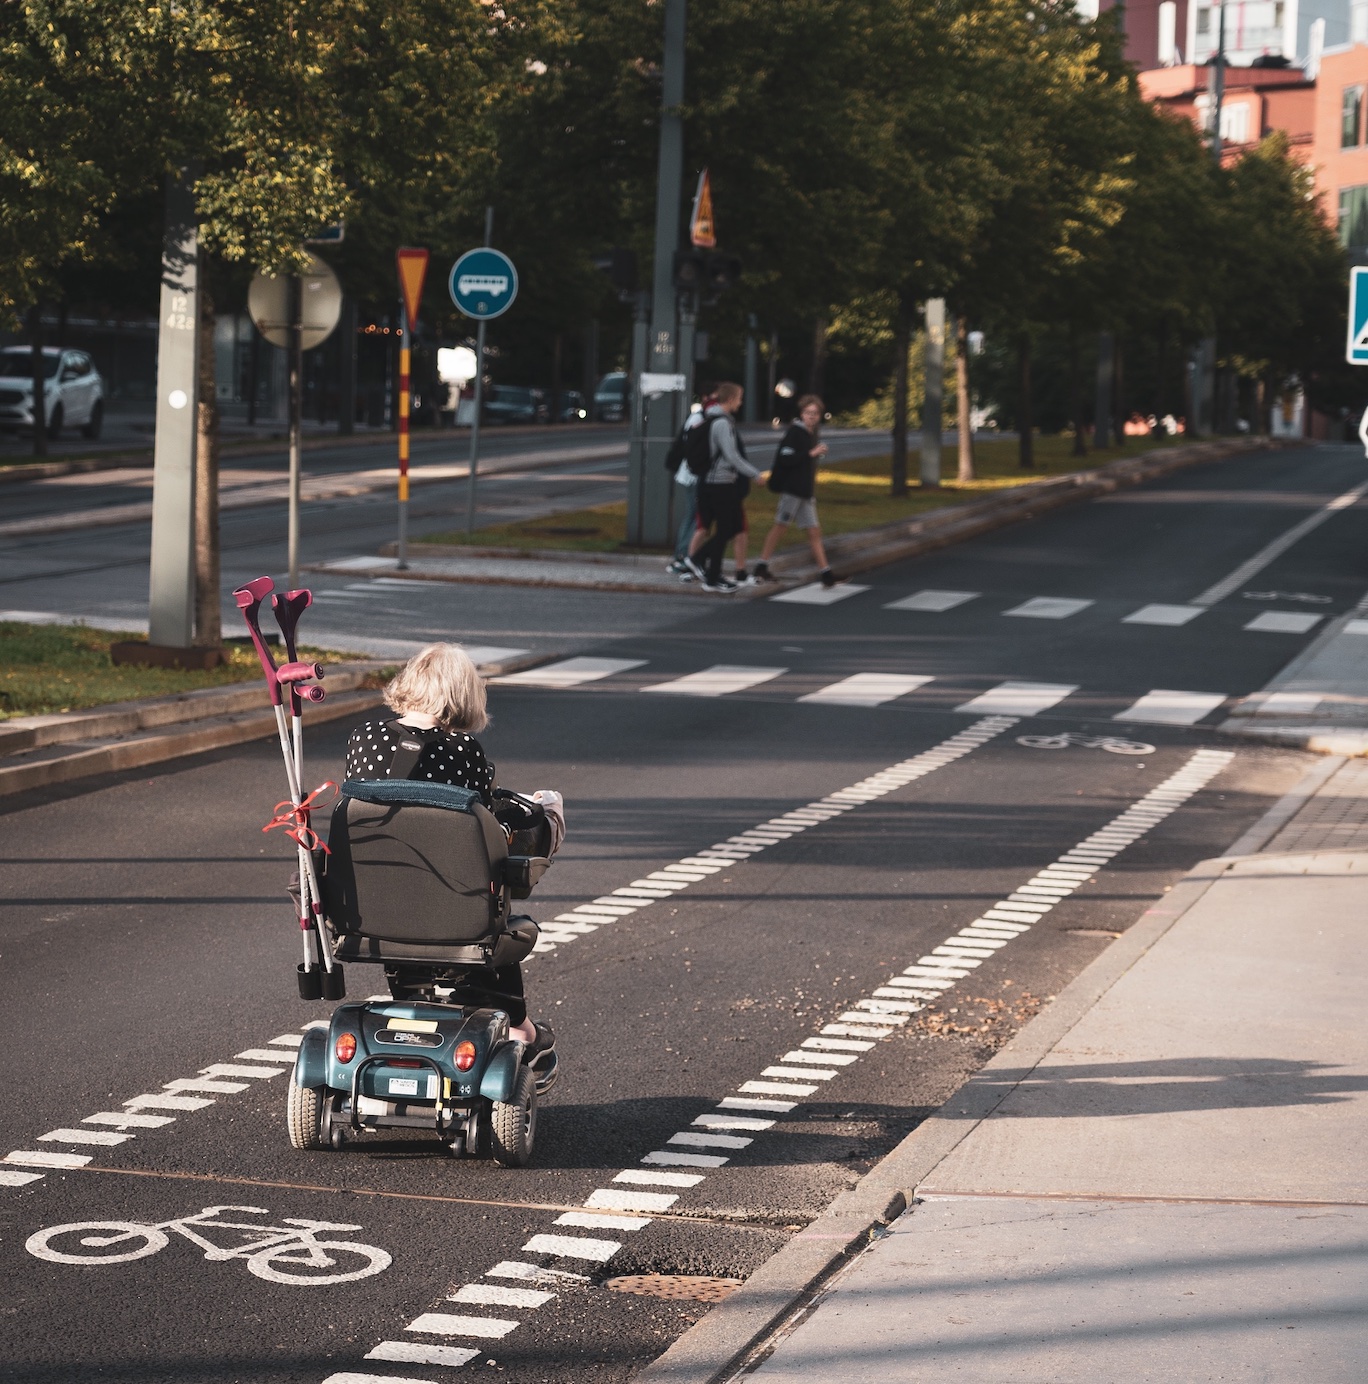 Woman using mobility scooter in bike lane; image by rasmus Gerdin, via Unsplash.com.